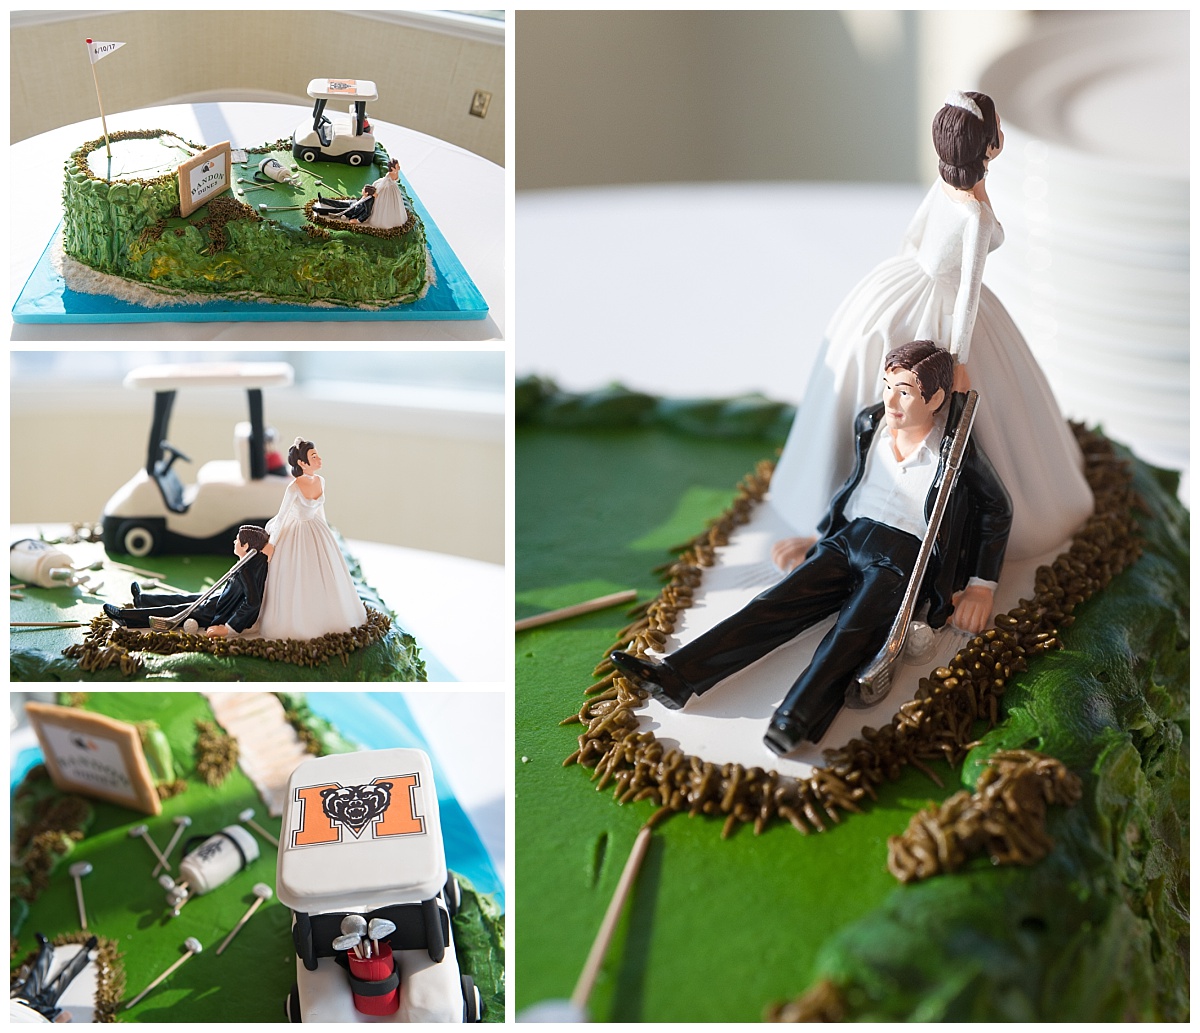 Custom grooms cake of golfer by Bonnie Brunt cakes